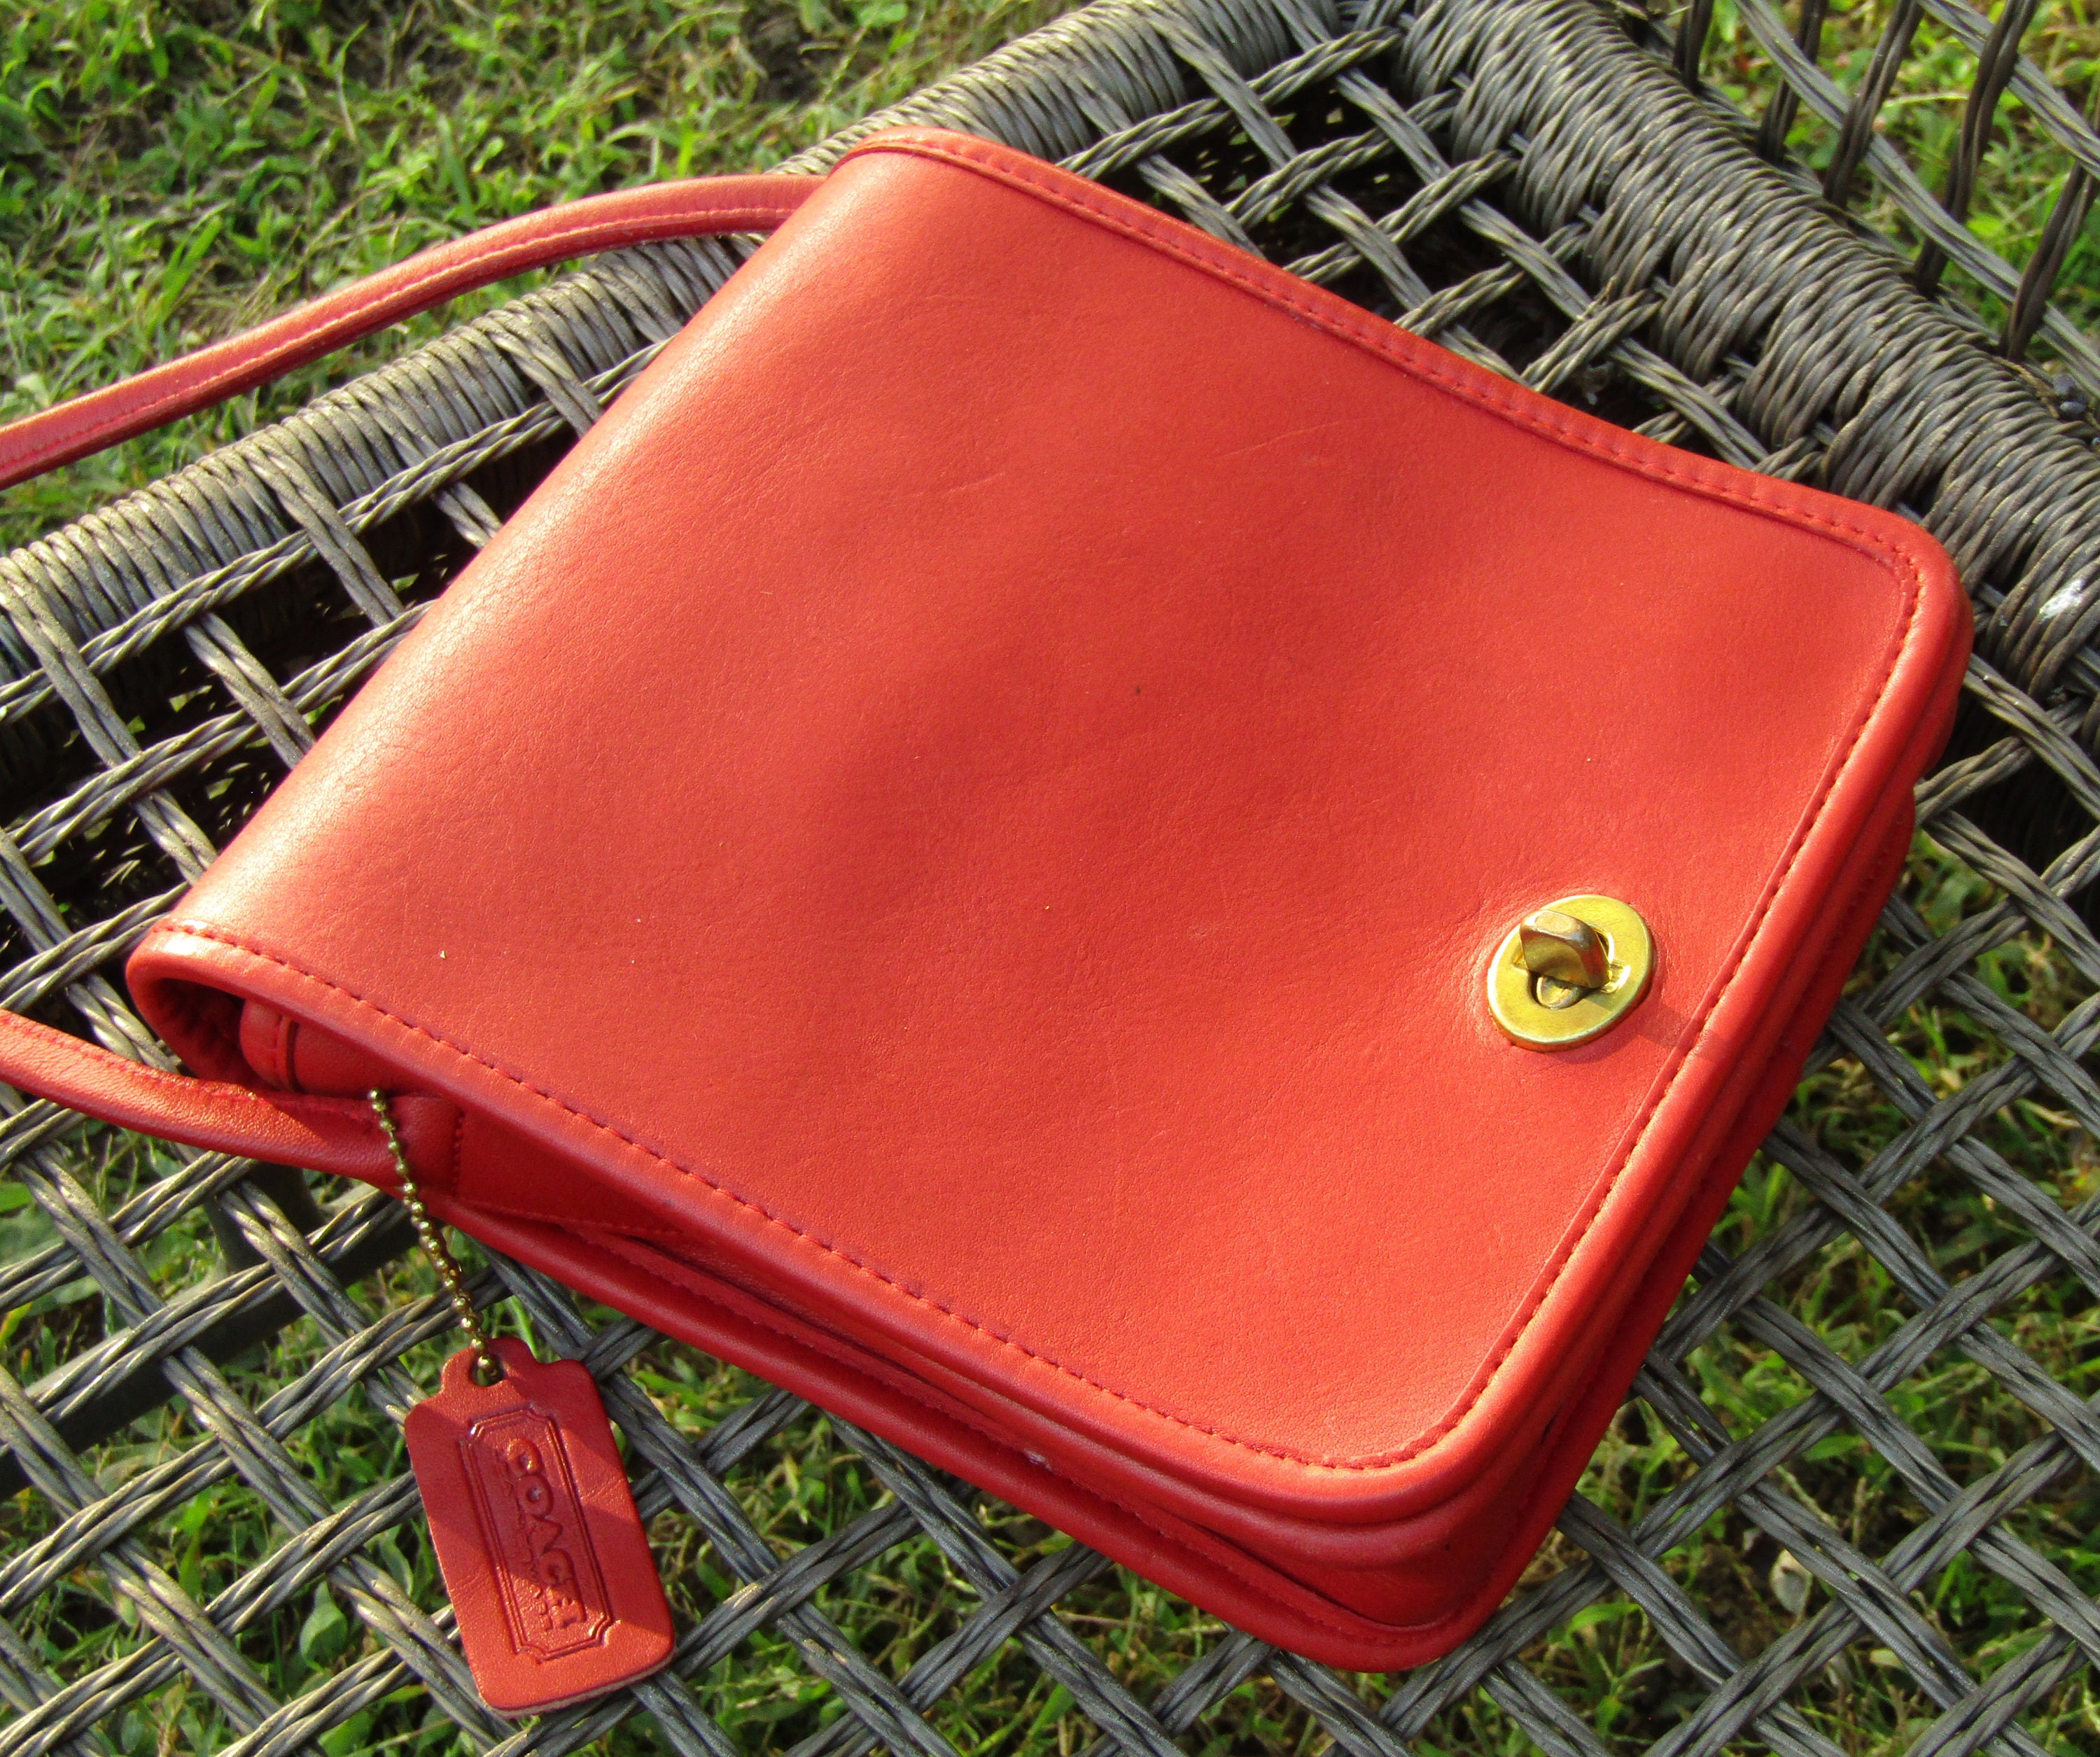 Vintage 1990s red crossbody COACH purse, adjustable strap, red COACH bag, Able Shoppe, coach handbag